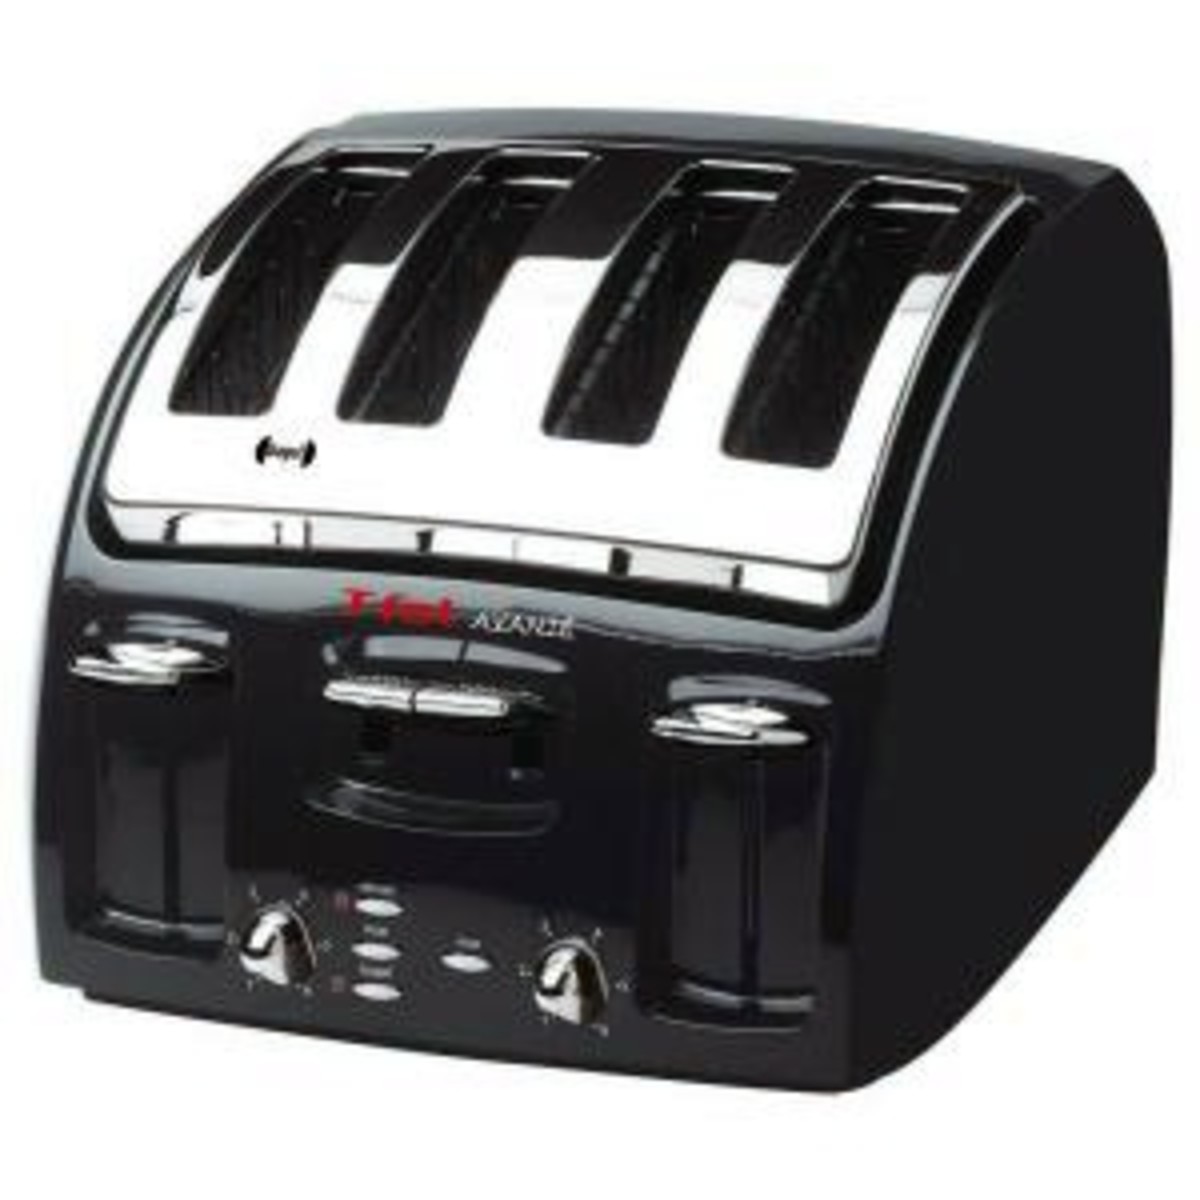 T-Fal Classic Avante 4-Slice toaster, Model # 5332002